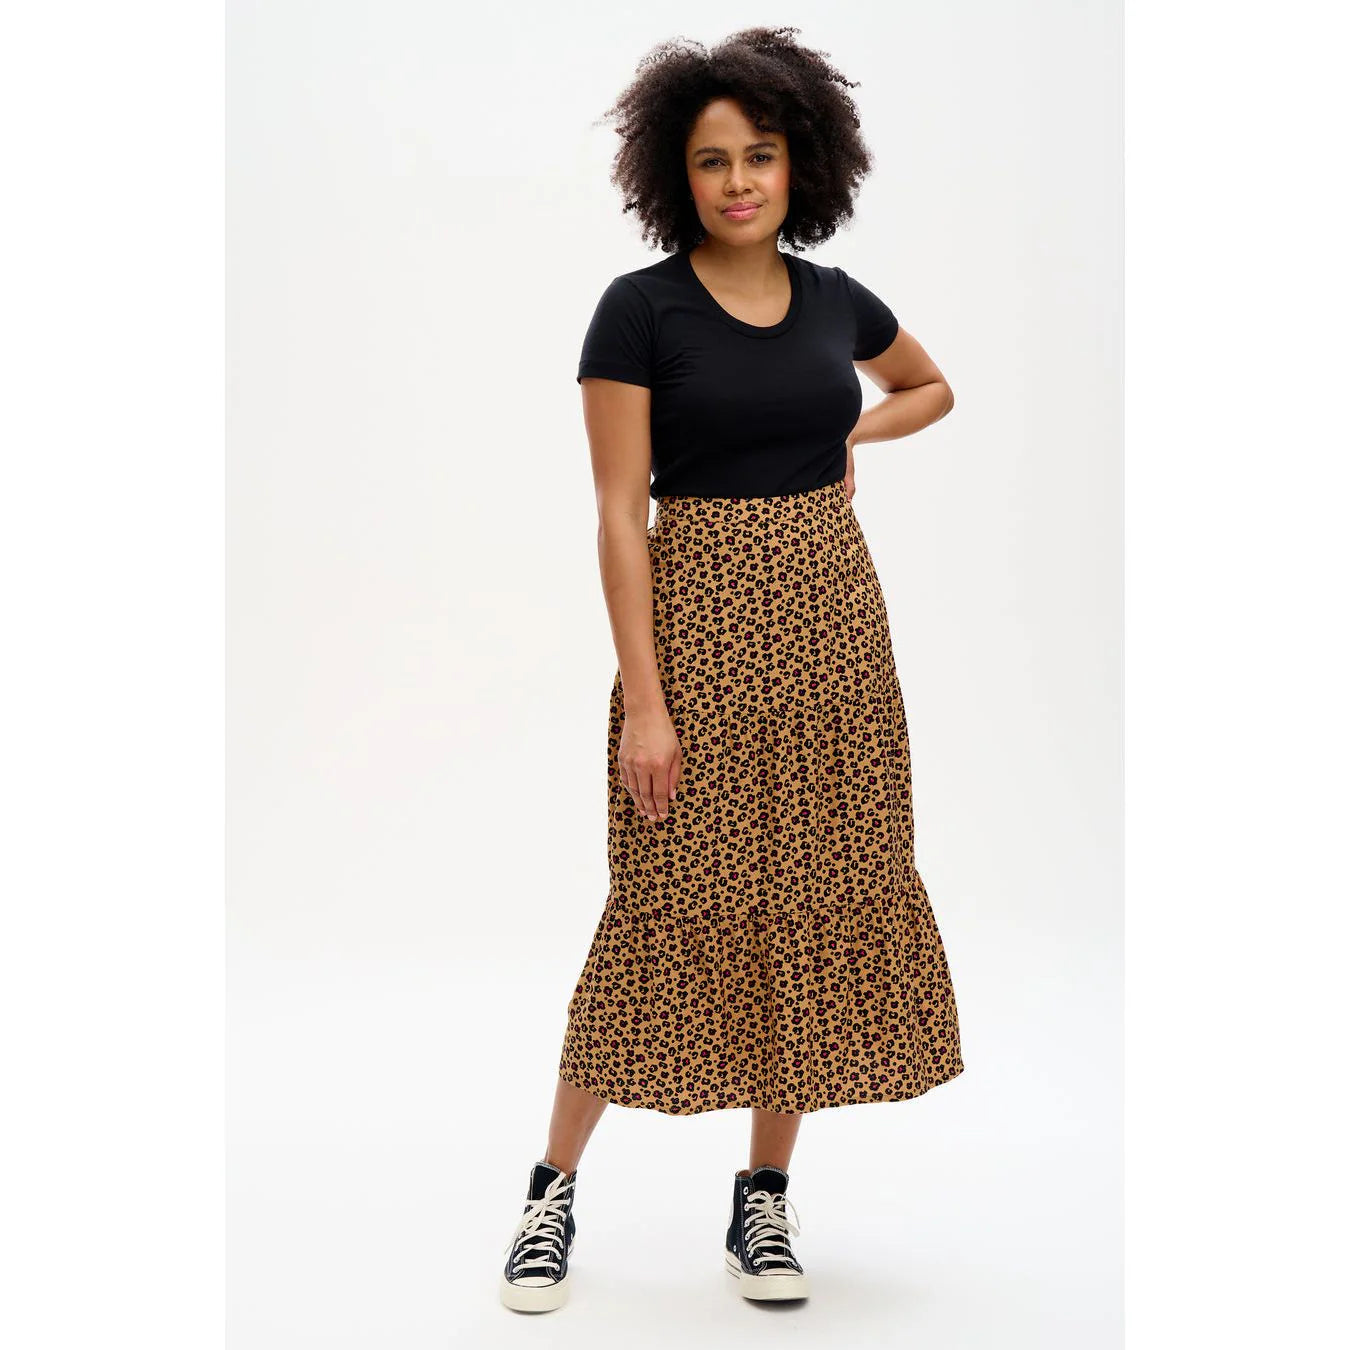 Sugarhill Felicity Tiered Skirt Tan Animal Floral Skirt BouChic | Homeware, Fashion, Gifts, Accessories 